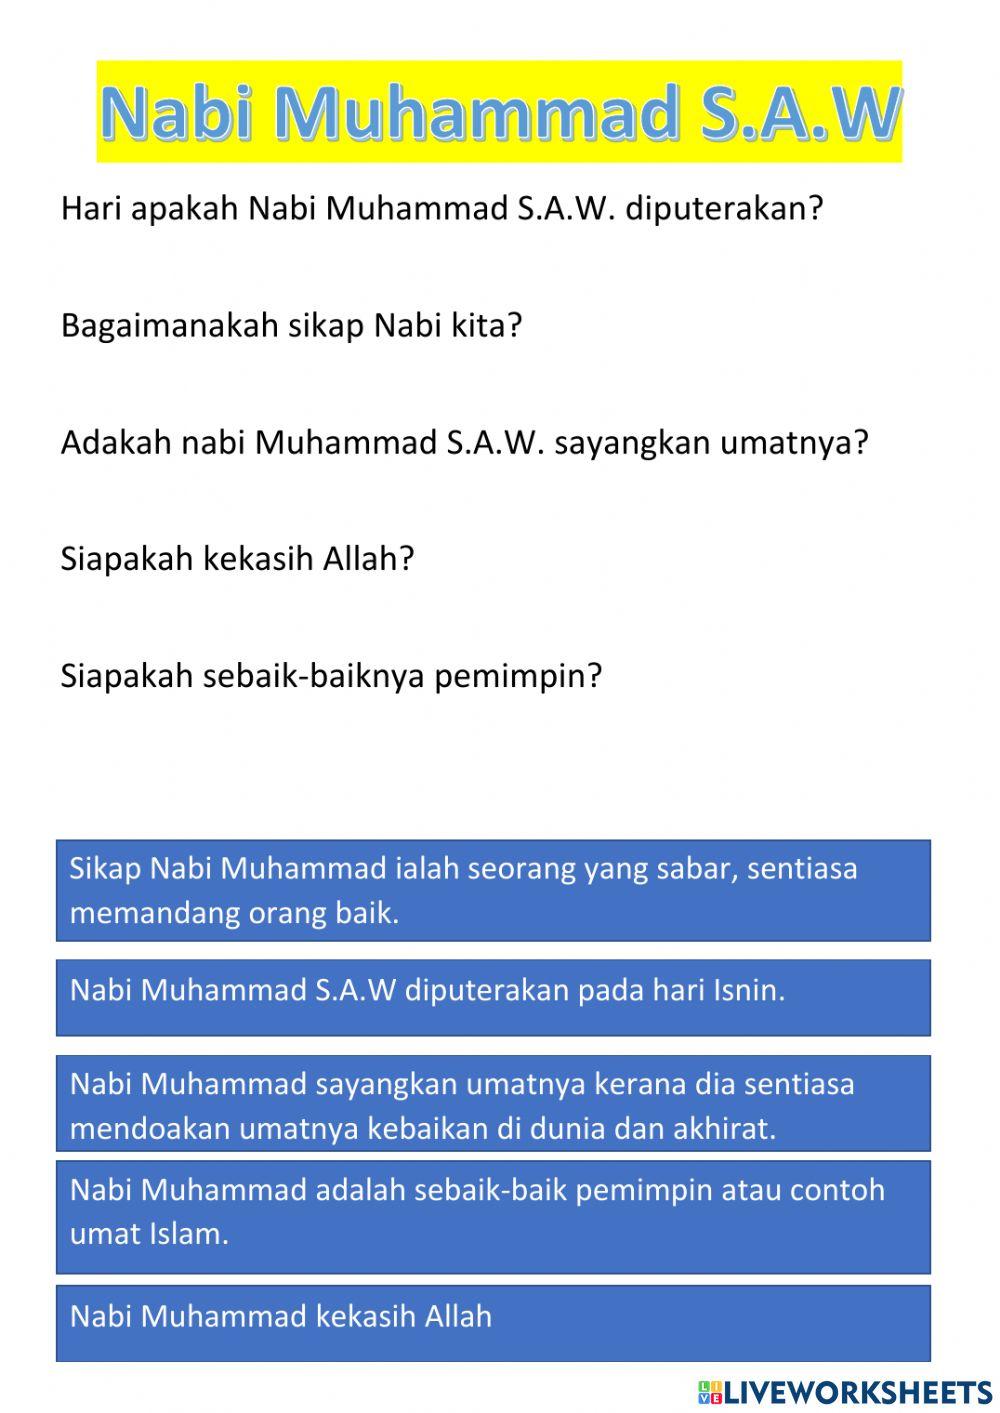 maulud nabi Muhammad SAW